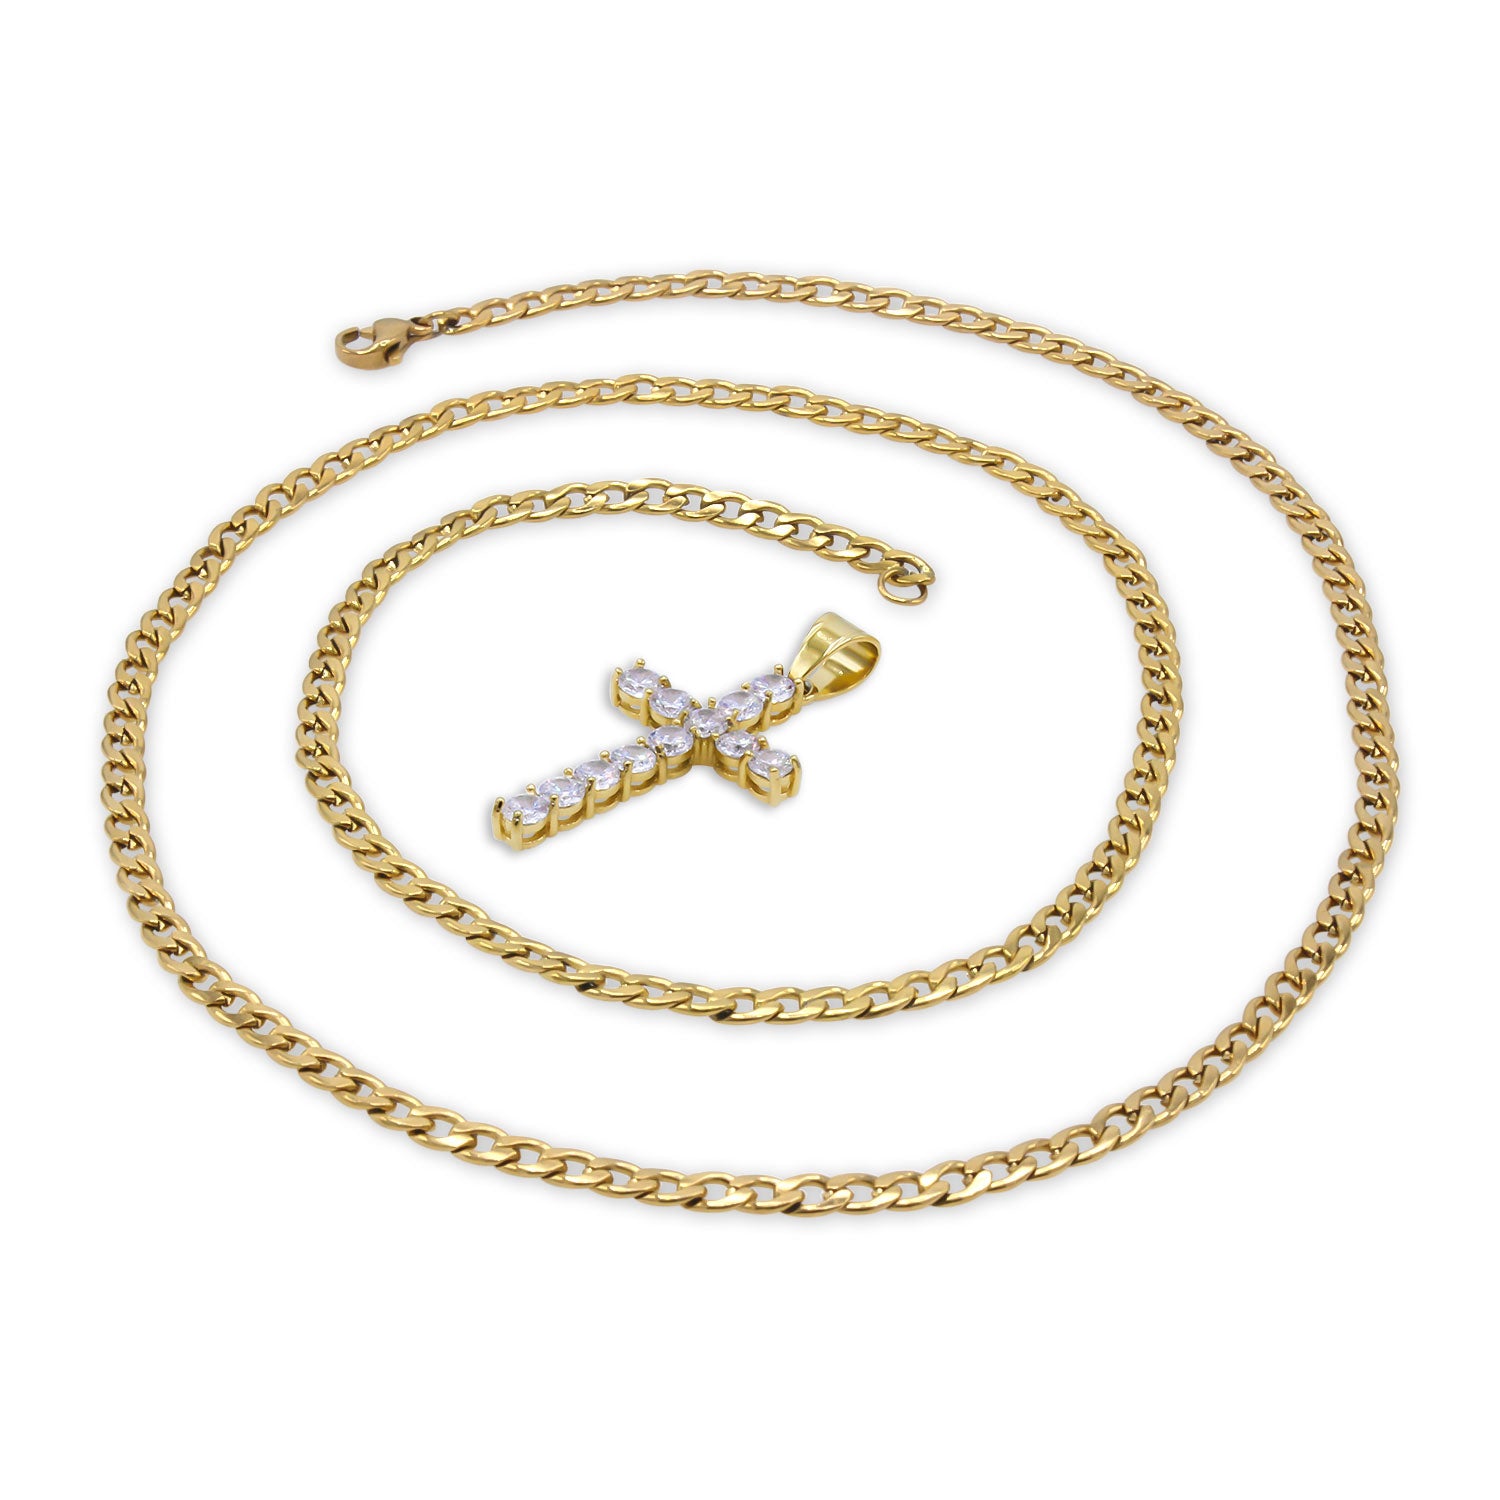 Cubic Zirconia Cross Pendant 14K Gold Plated Necklace Set